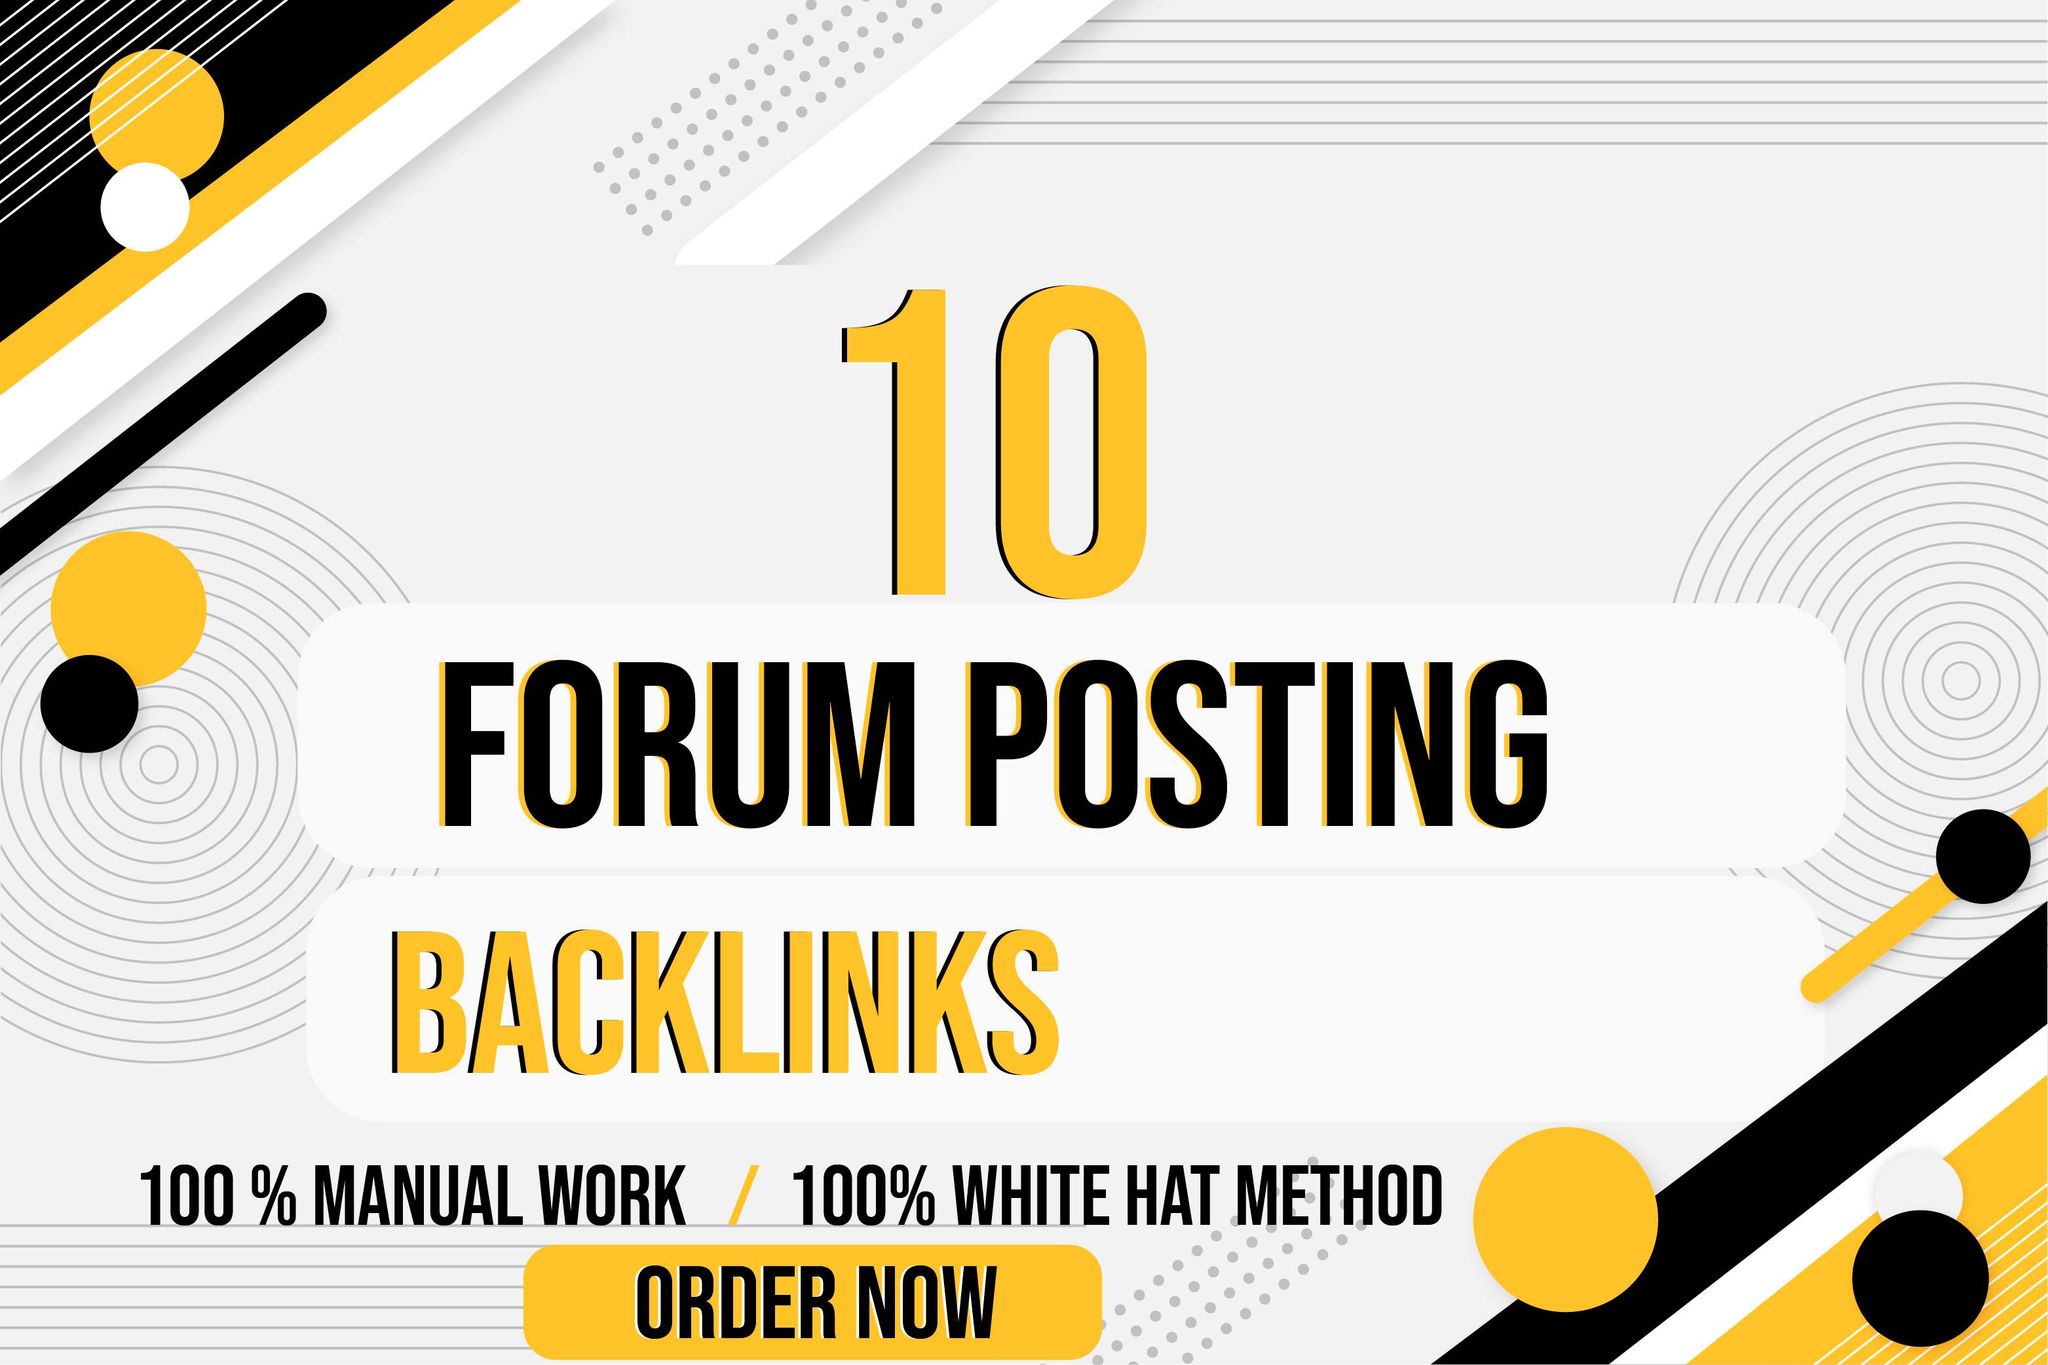 I will provide 10 forum posting backlinks